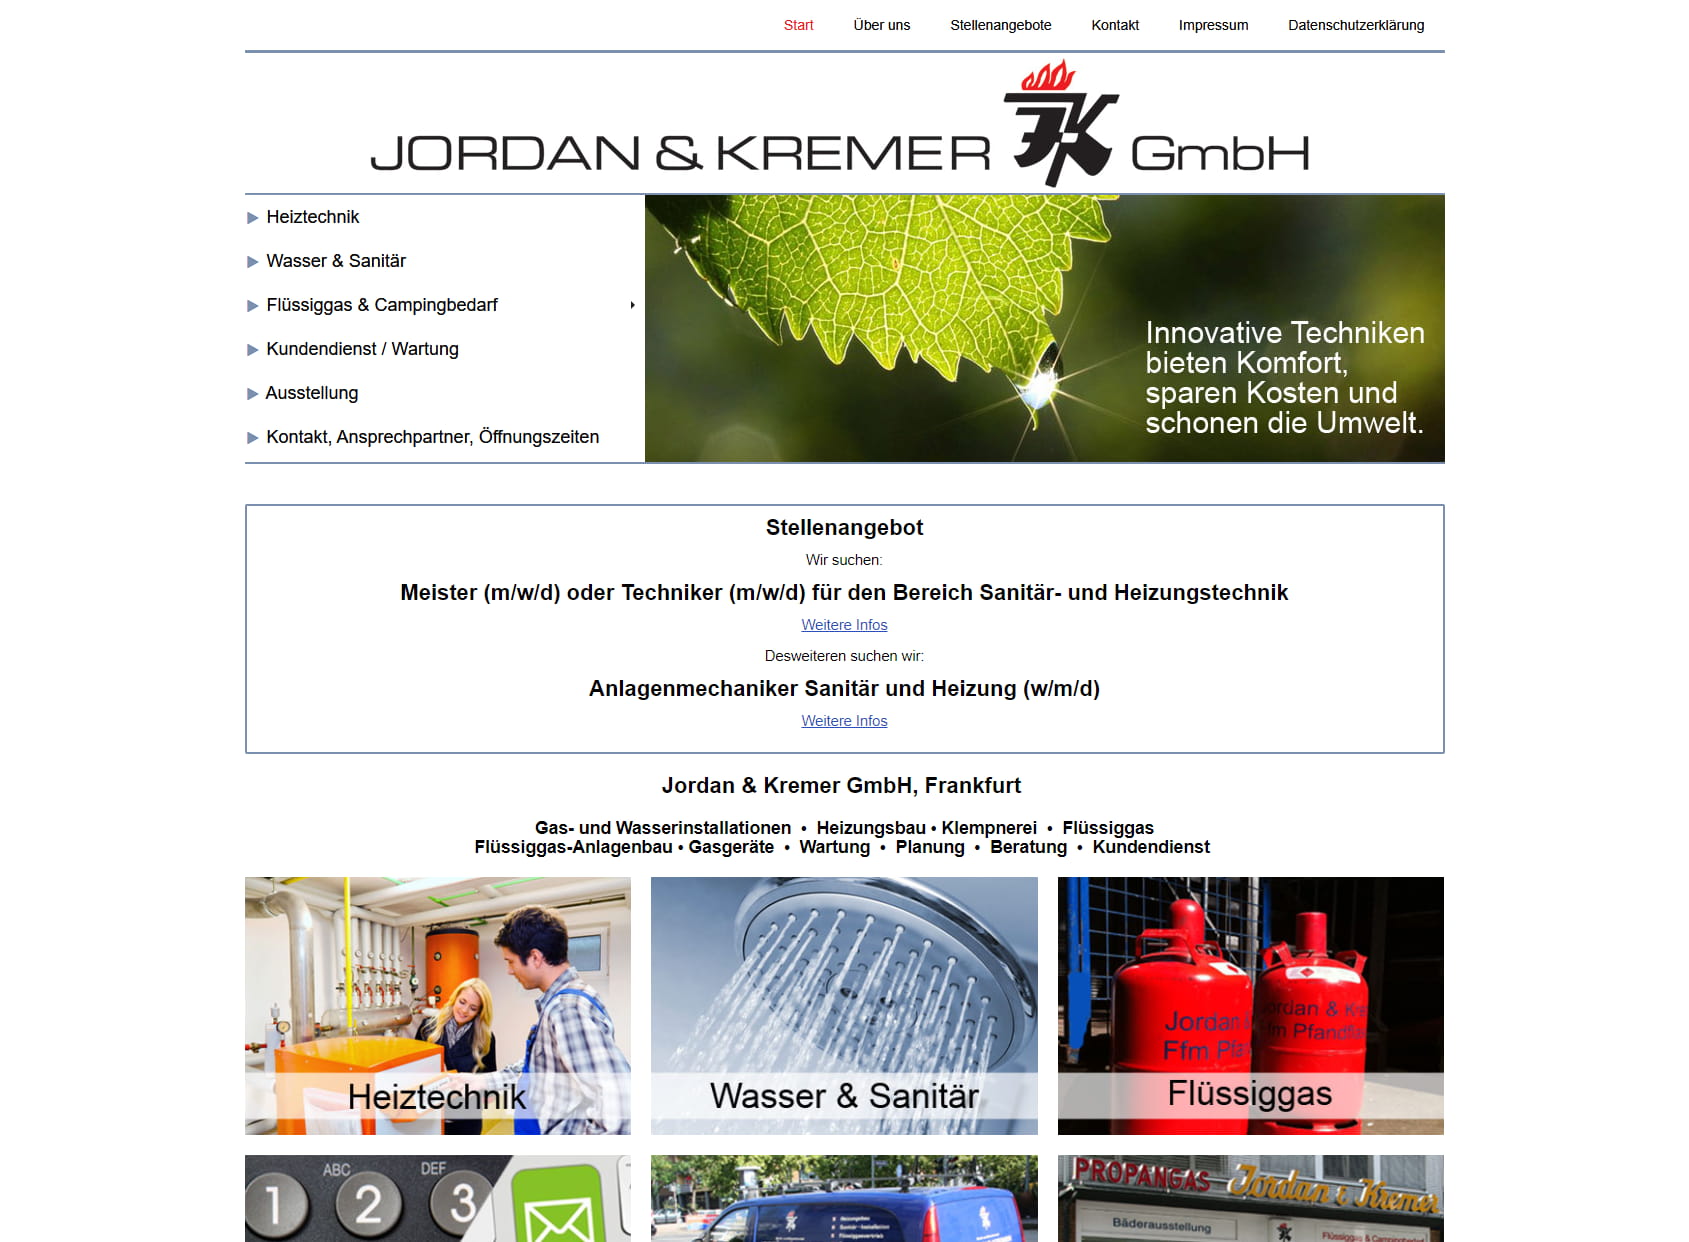 Jordan & Kremer GmbH - Frankfurt Bornheim